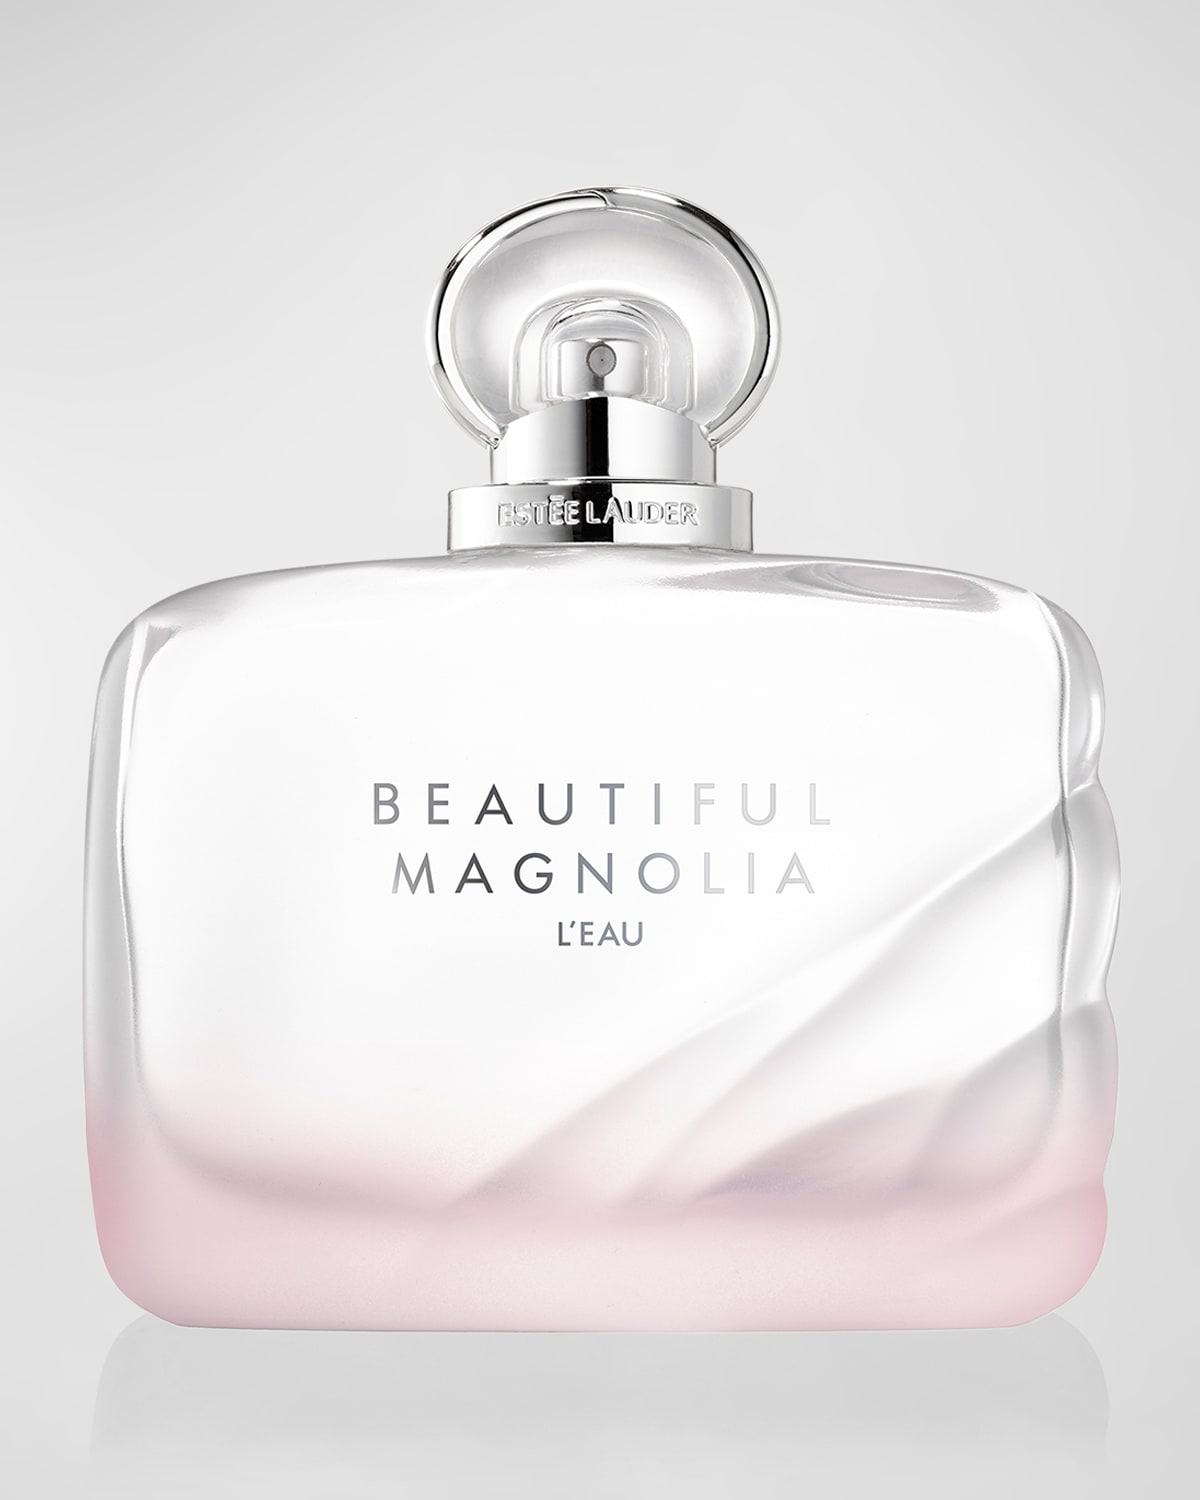 Estee Lauder Beautiful Magnolia L'Eau Eau de Toilette Spray, 3.3 oz